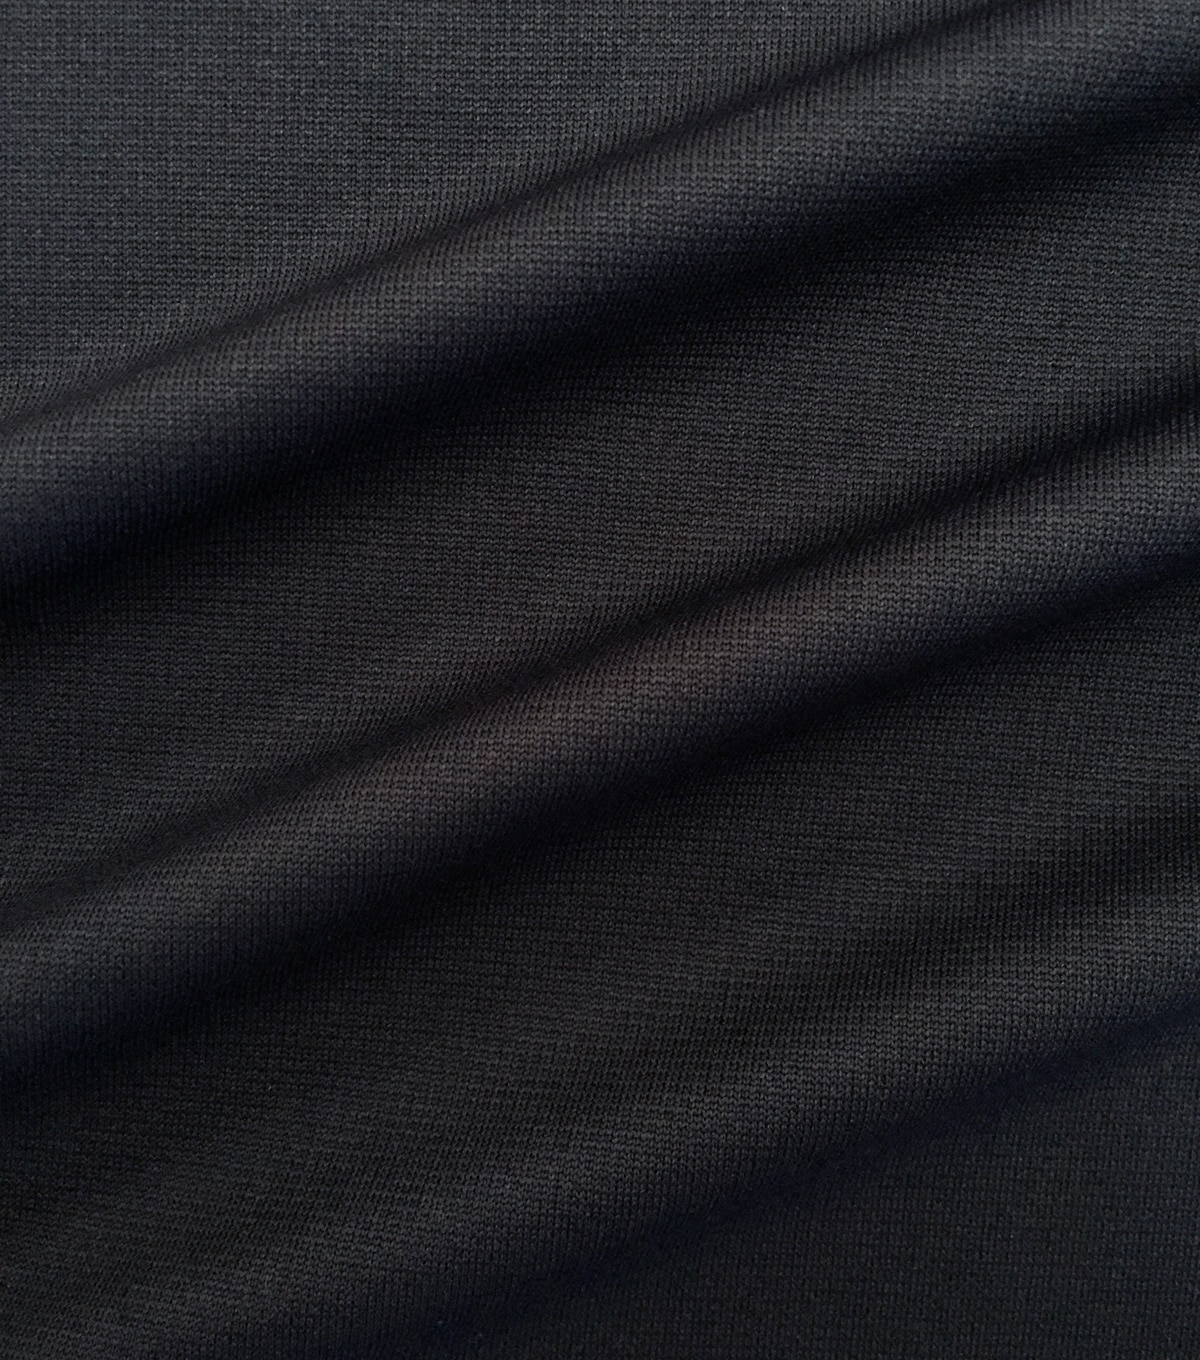 Apparel Fabric - Fabric for Clothing & Apparel | JOANN